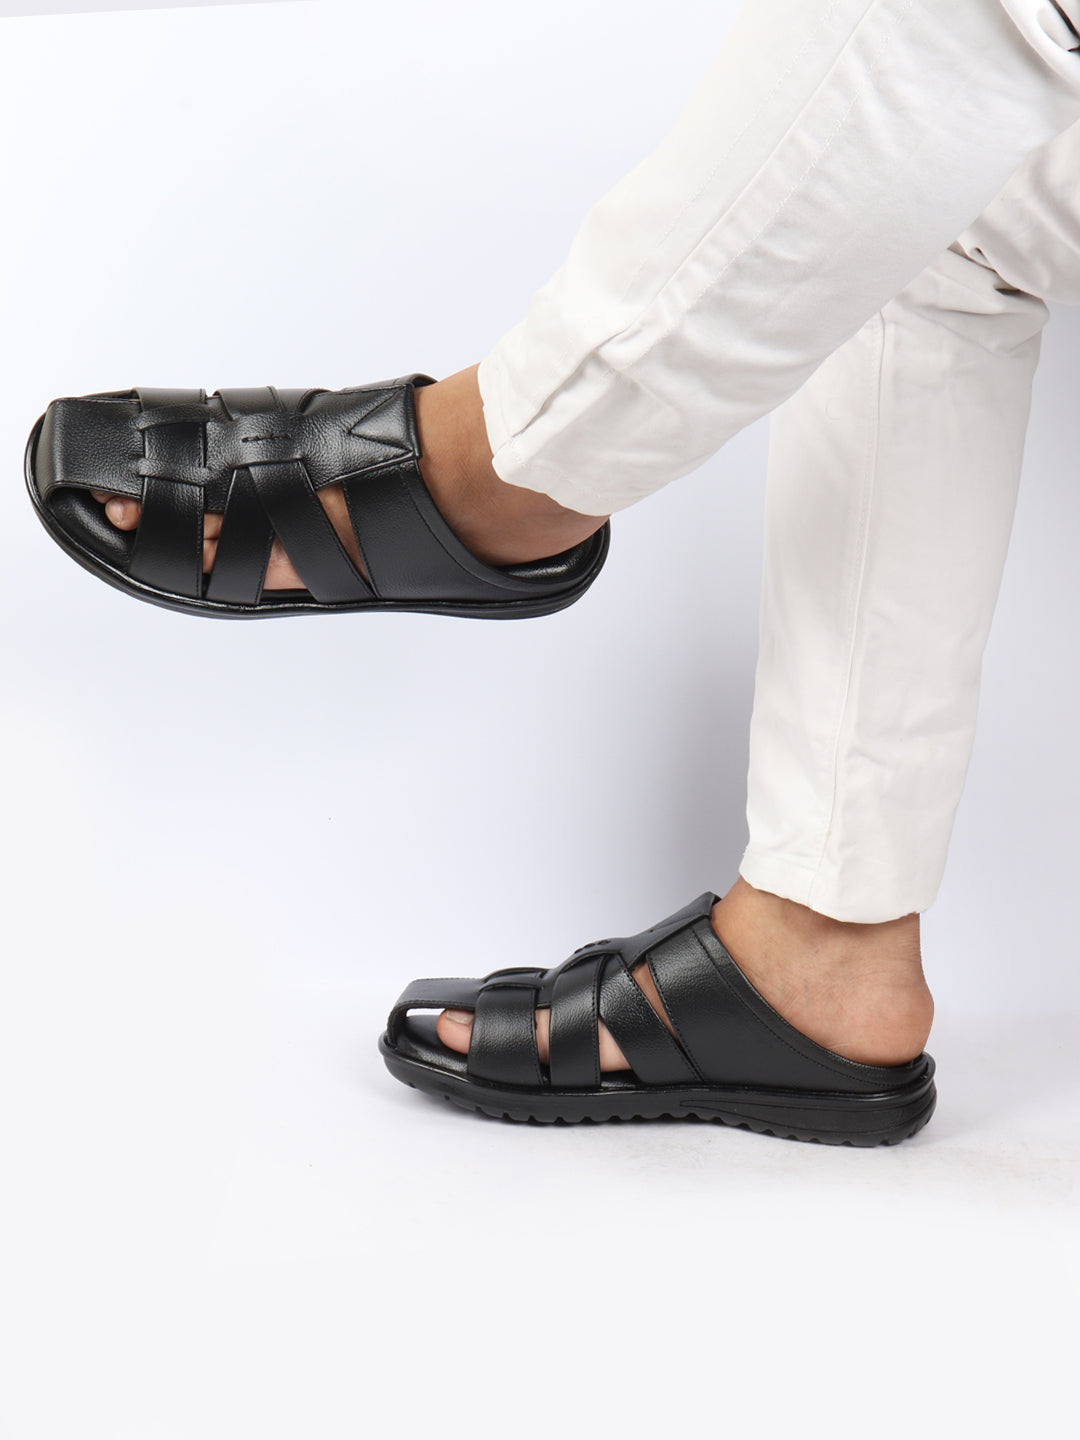 dress sandals for men